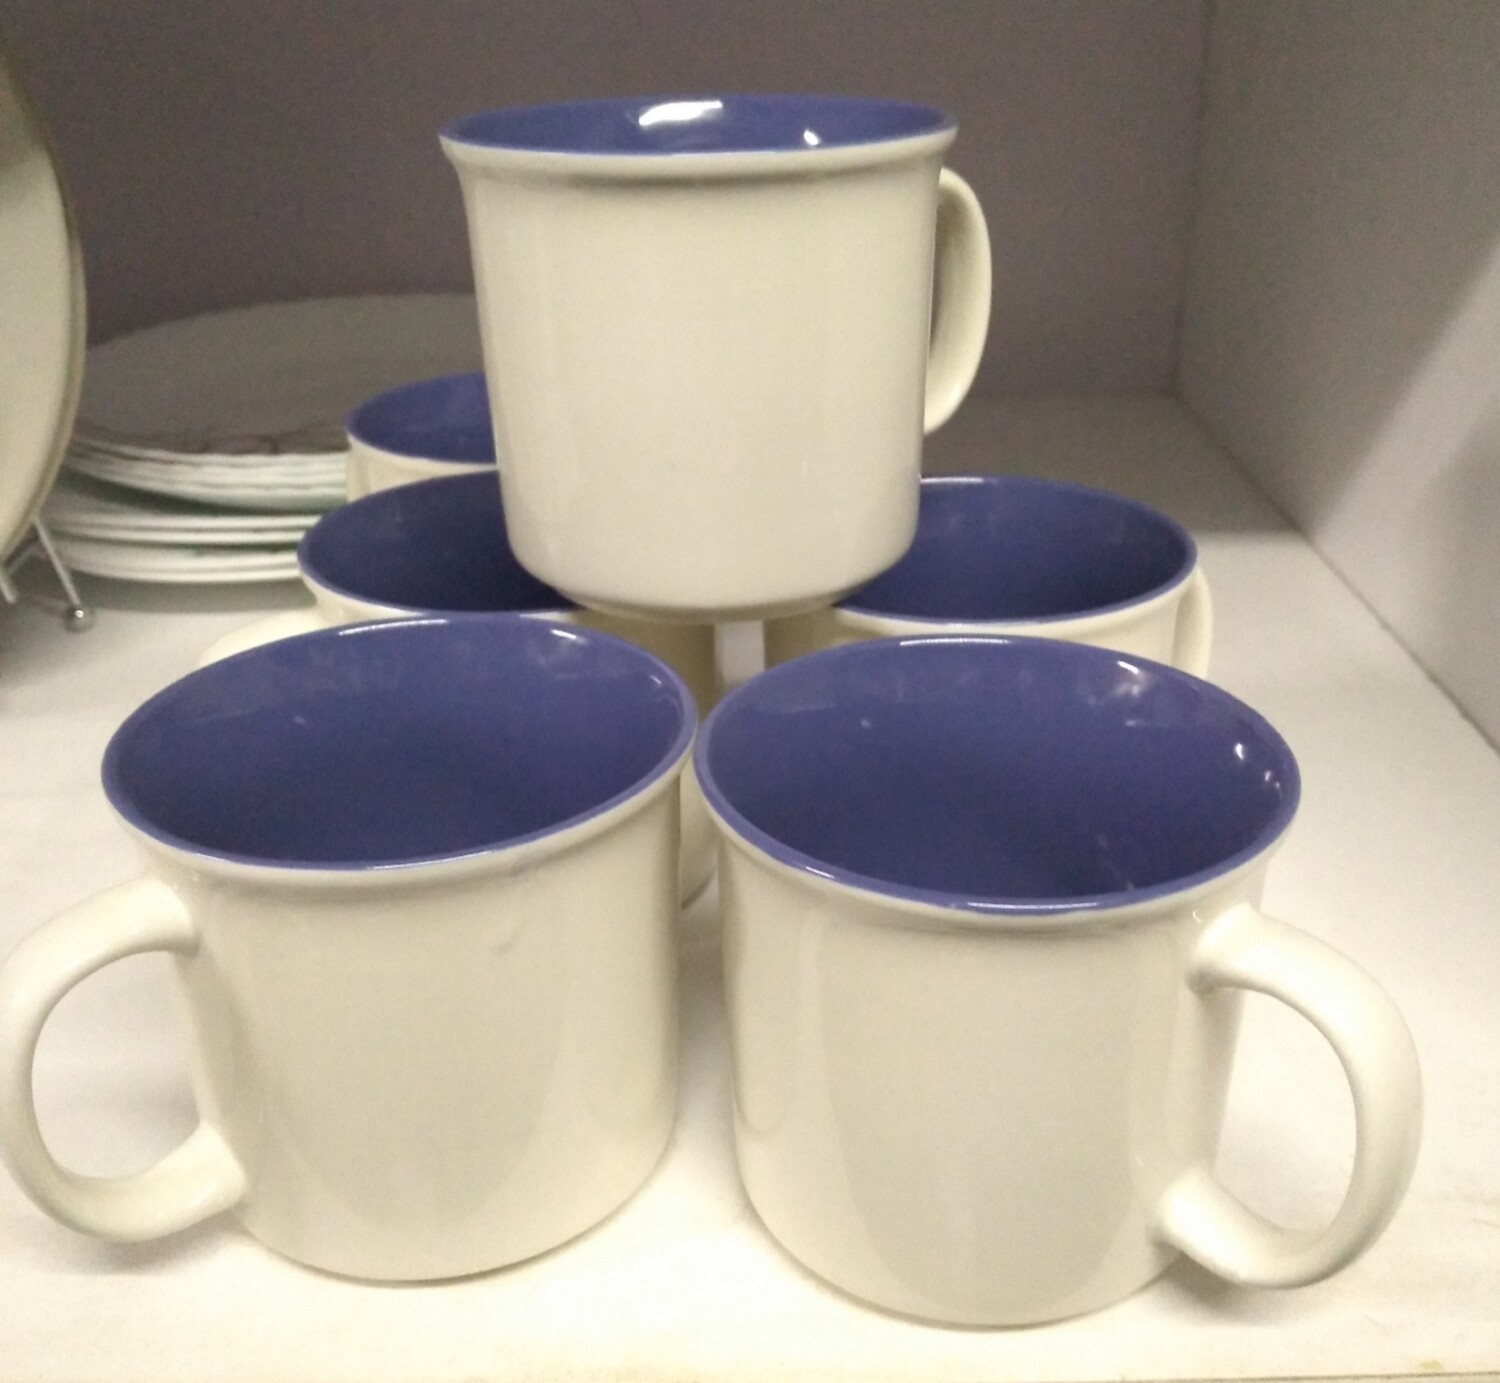 Sbest Mug outer white blue inside set of 6